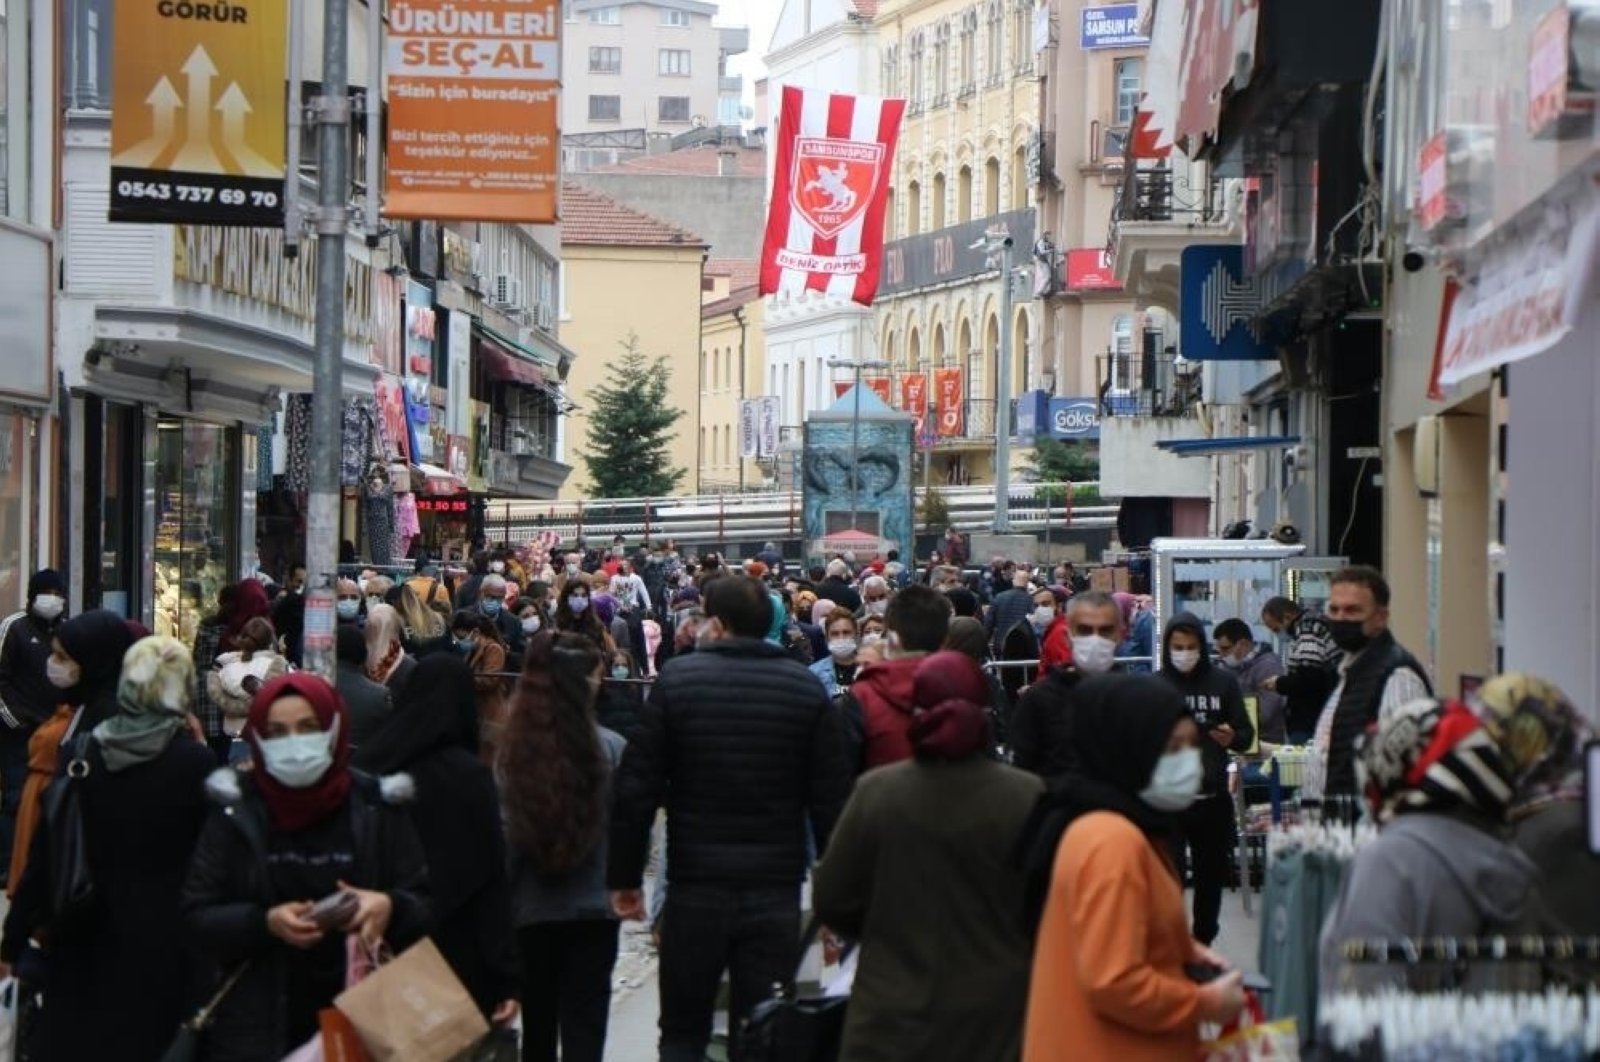 Literasi kesehatan masih rendah di Turki